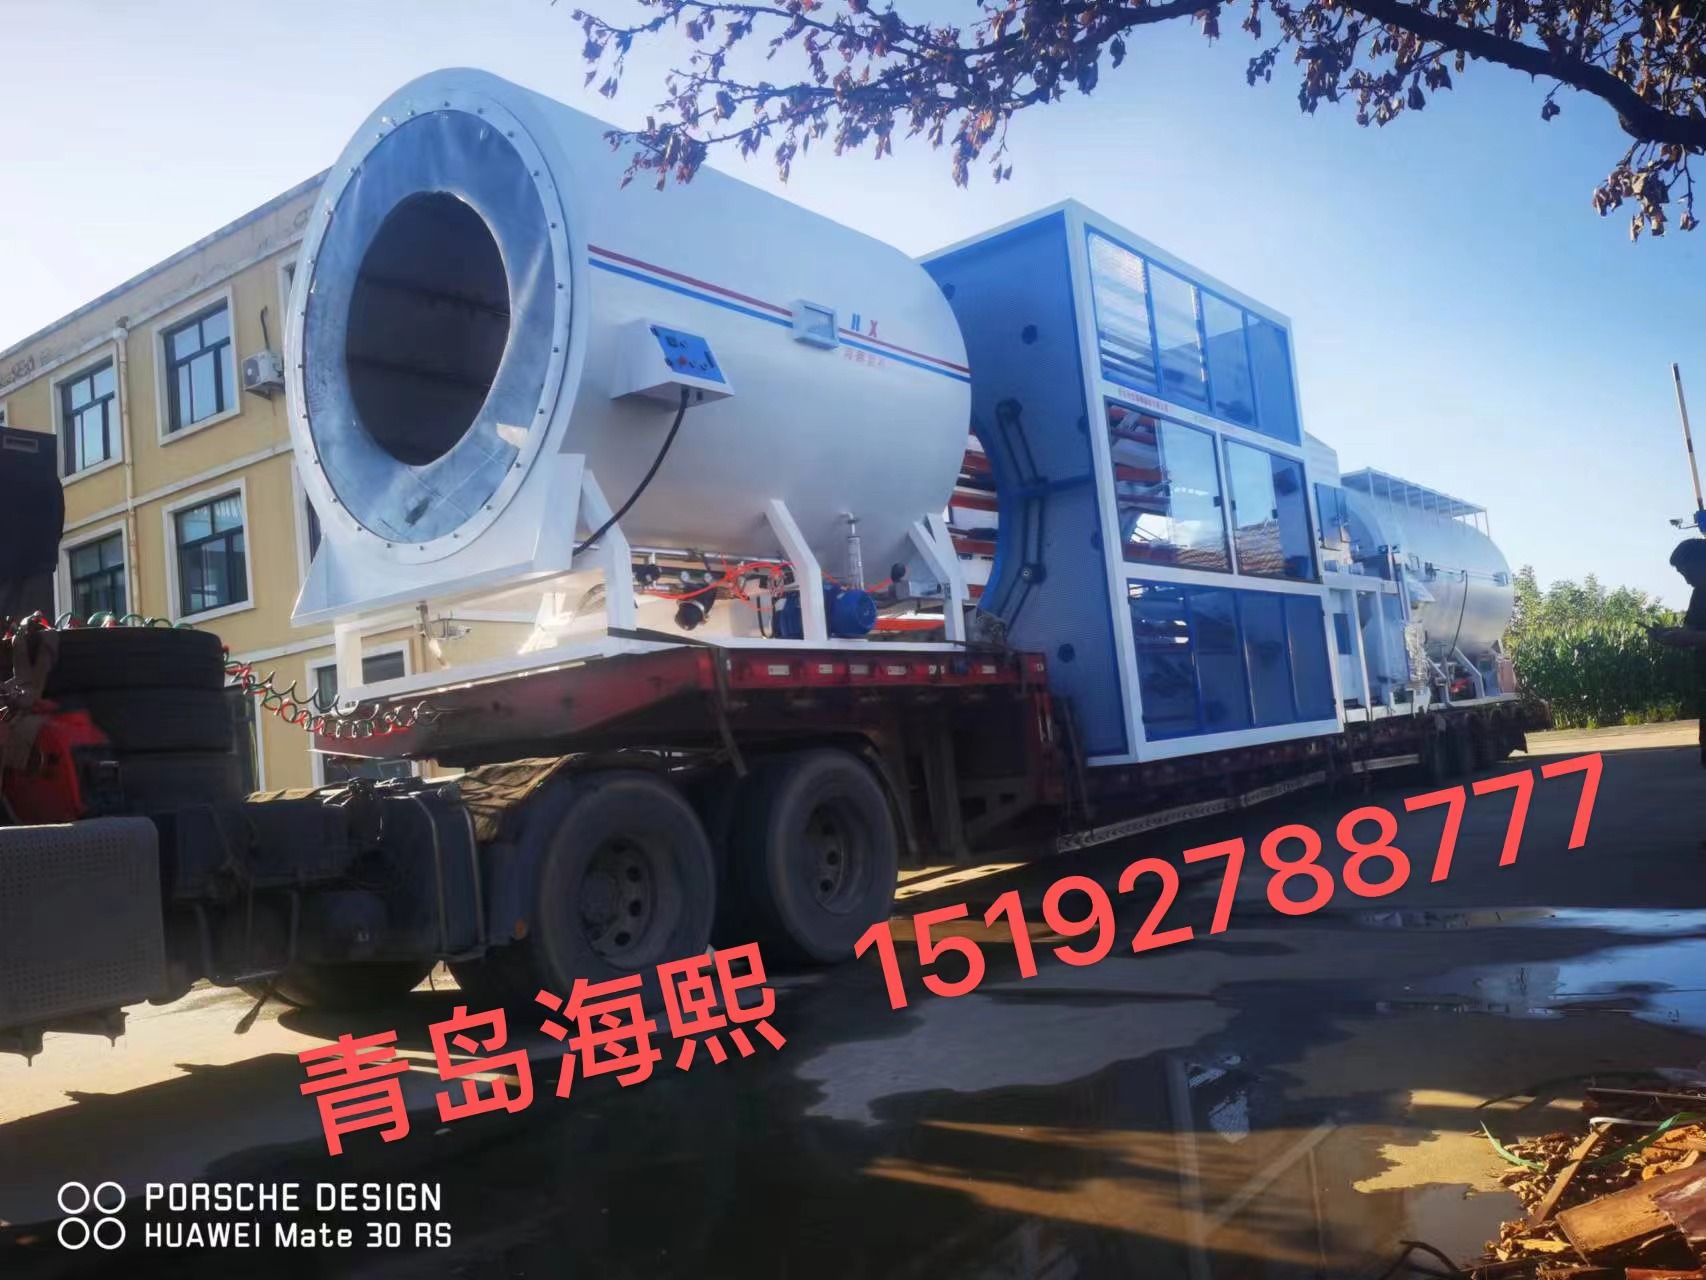 The first car of Hebei Shengcang Pipeline Anti-cor